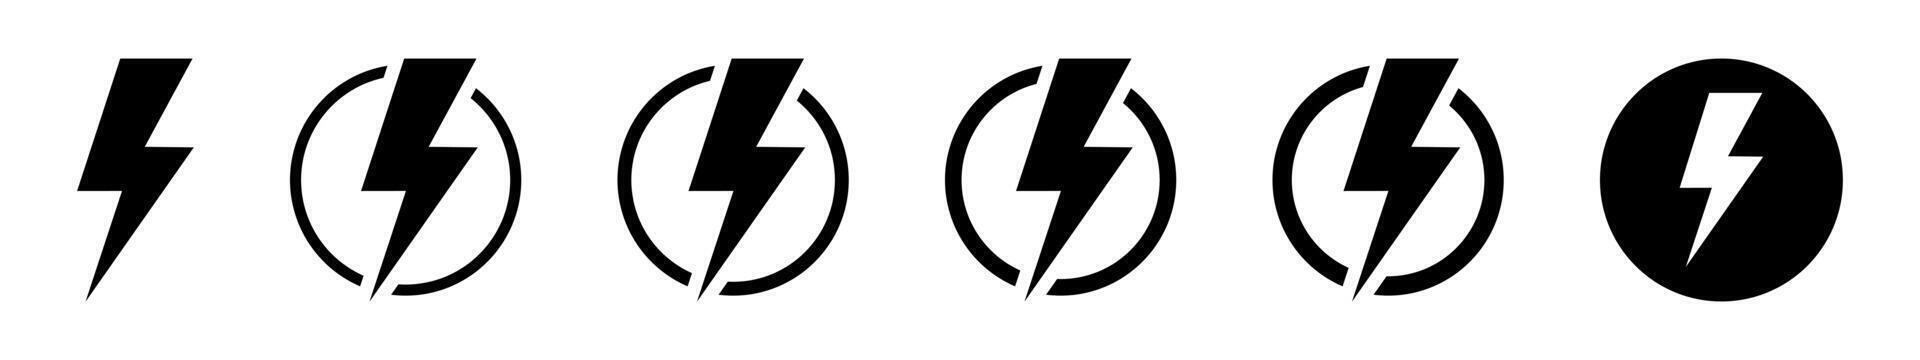 raio, elétrico poder vetor logotipo Projeto elemento. energia e trovão eletricidade símbolo conceito. relâmpago parafuso placa dentro a círculo. poder velozes Rapidez logotipo.